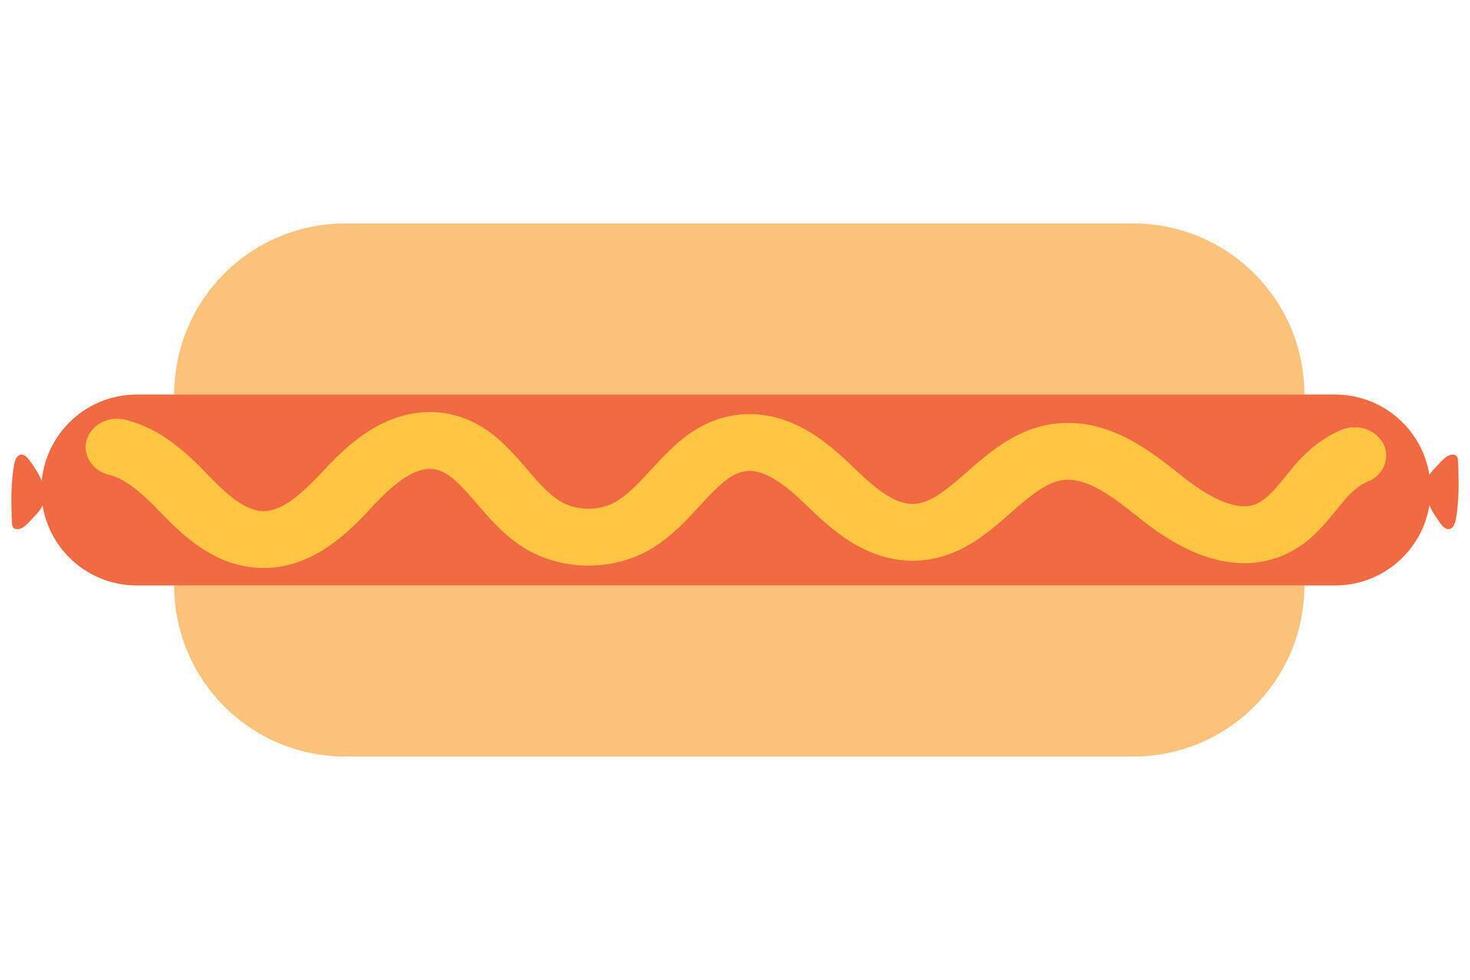 Hot dog flat icon isolated on white background. vector